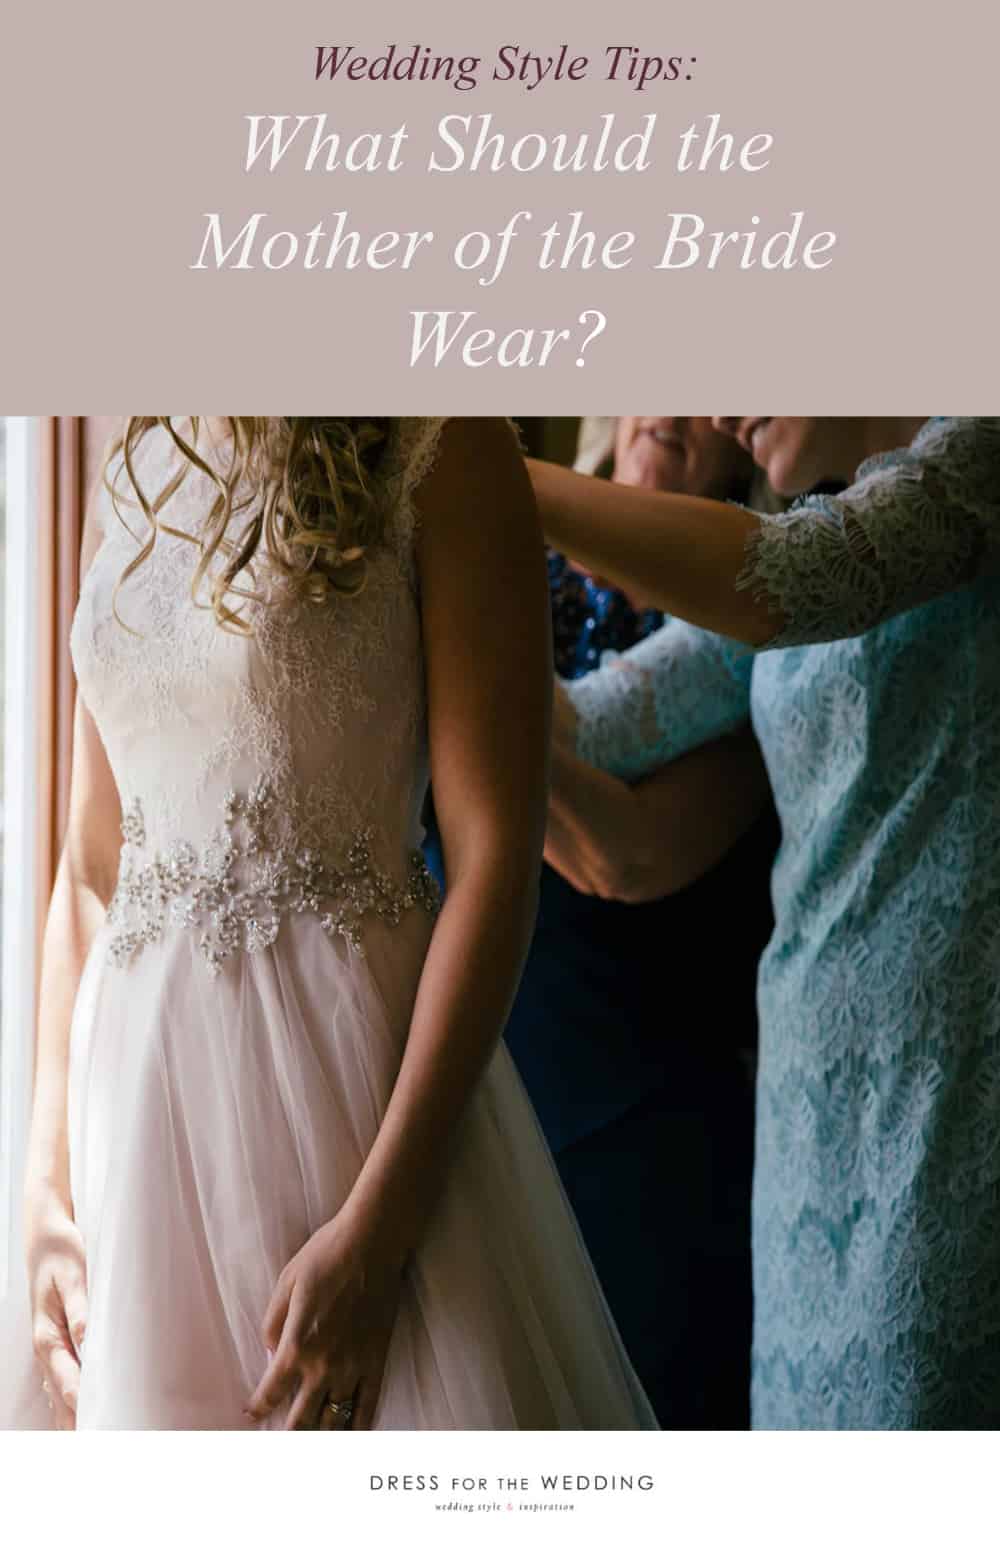 What Color Should the Mother-of-the-Bride Wear + Etiquette FYIs